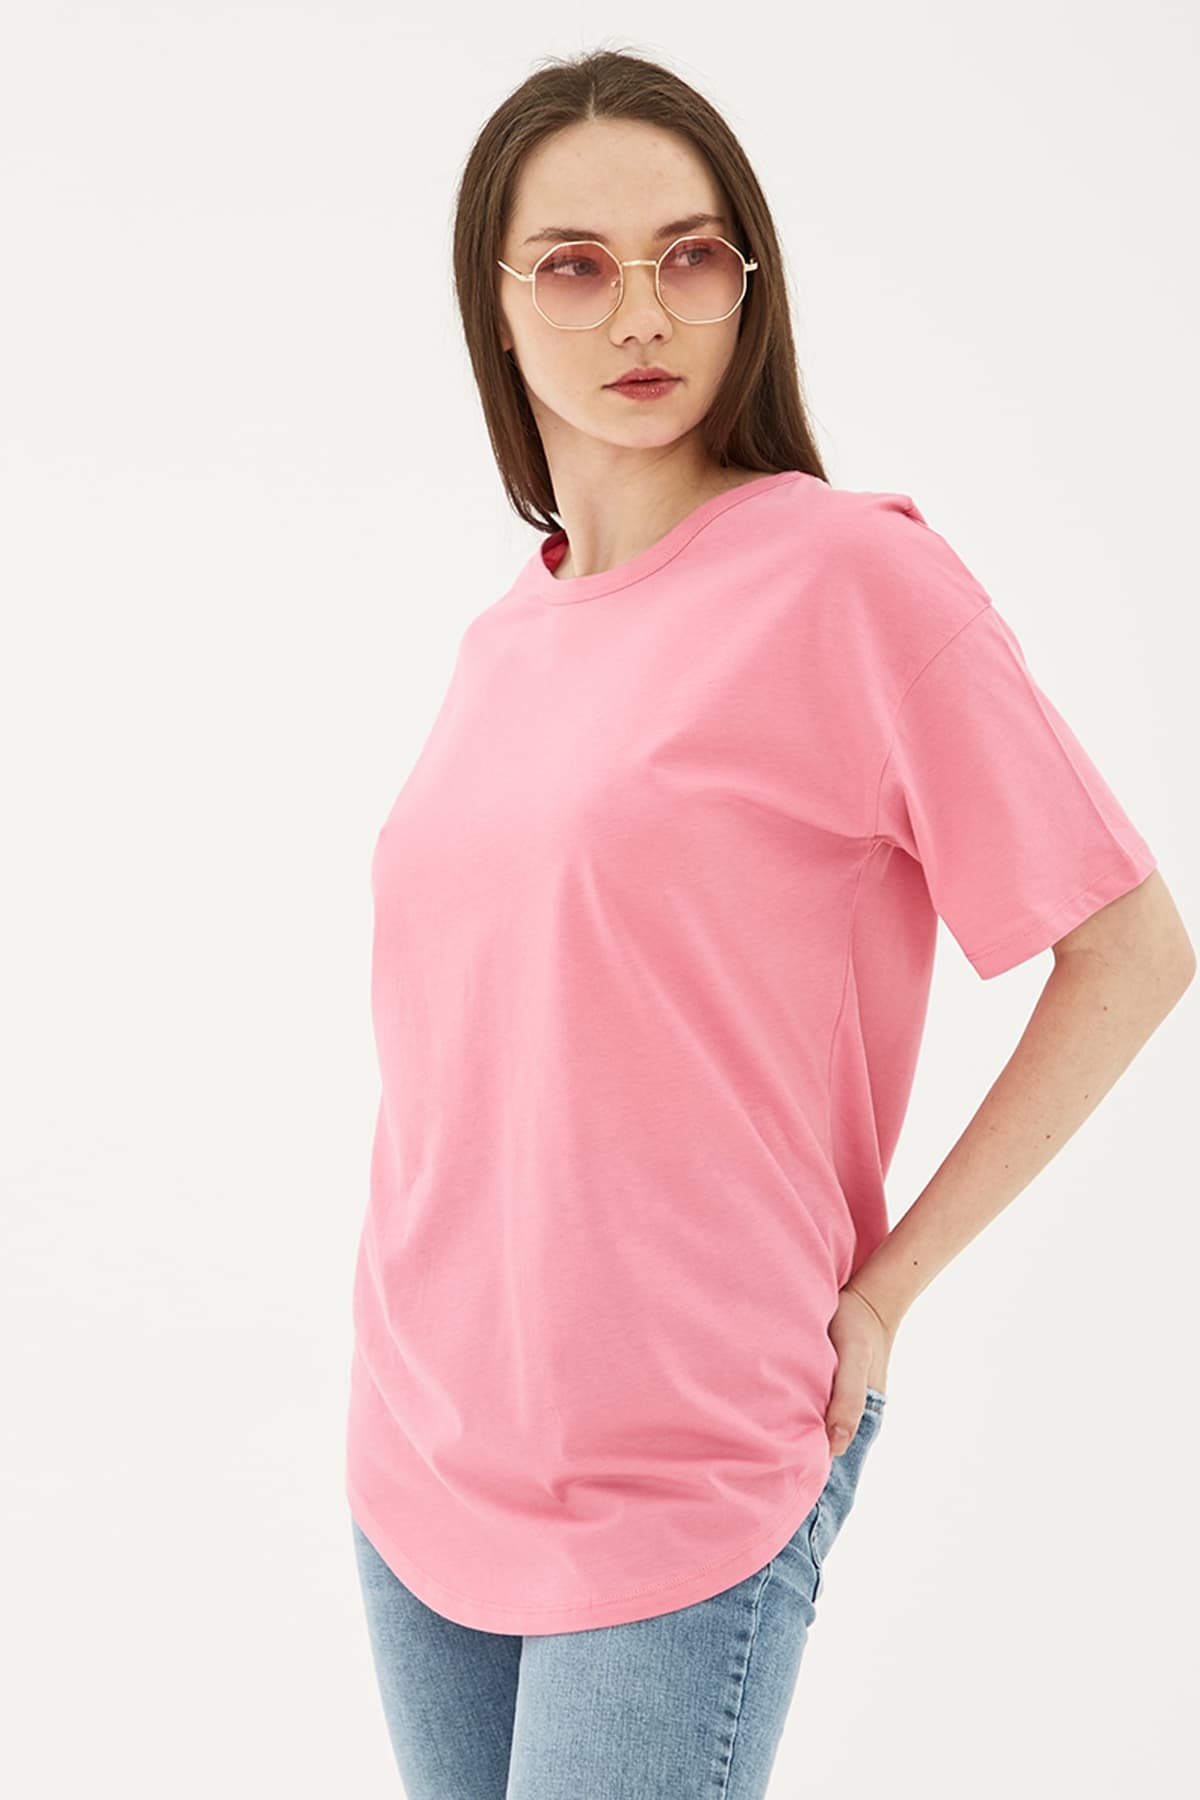 T-Shirt Pembe / Pink | Markasız